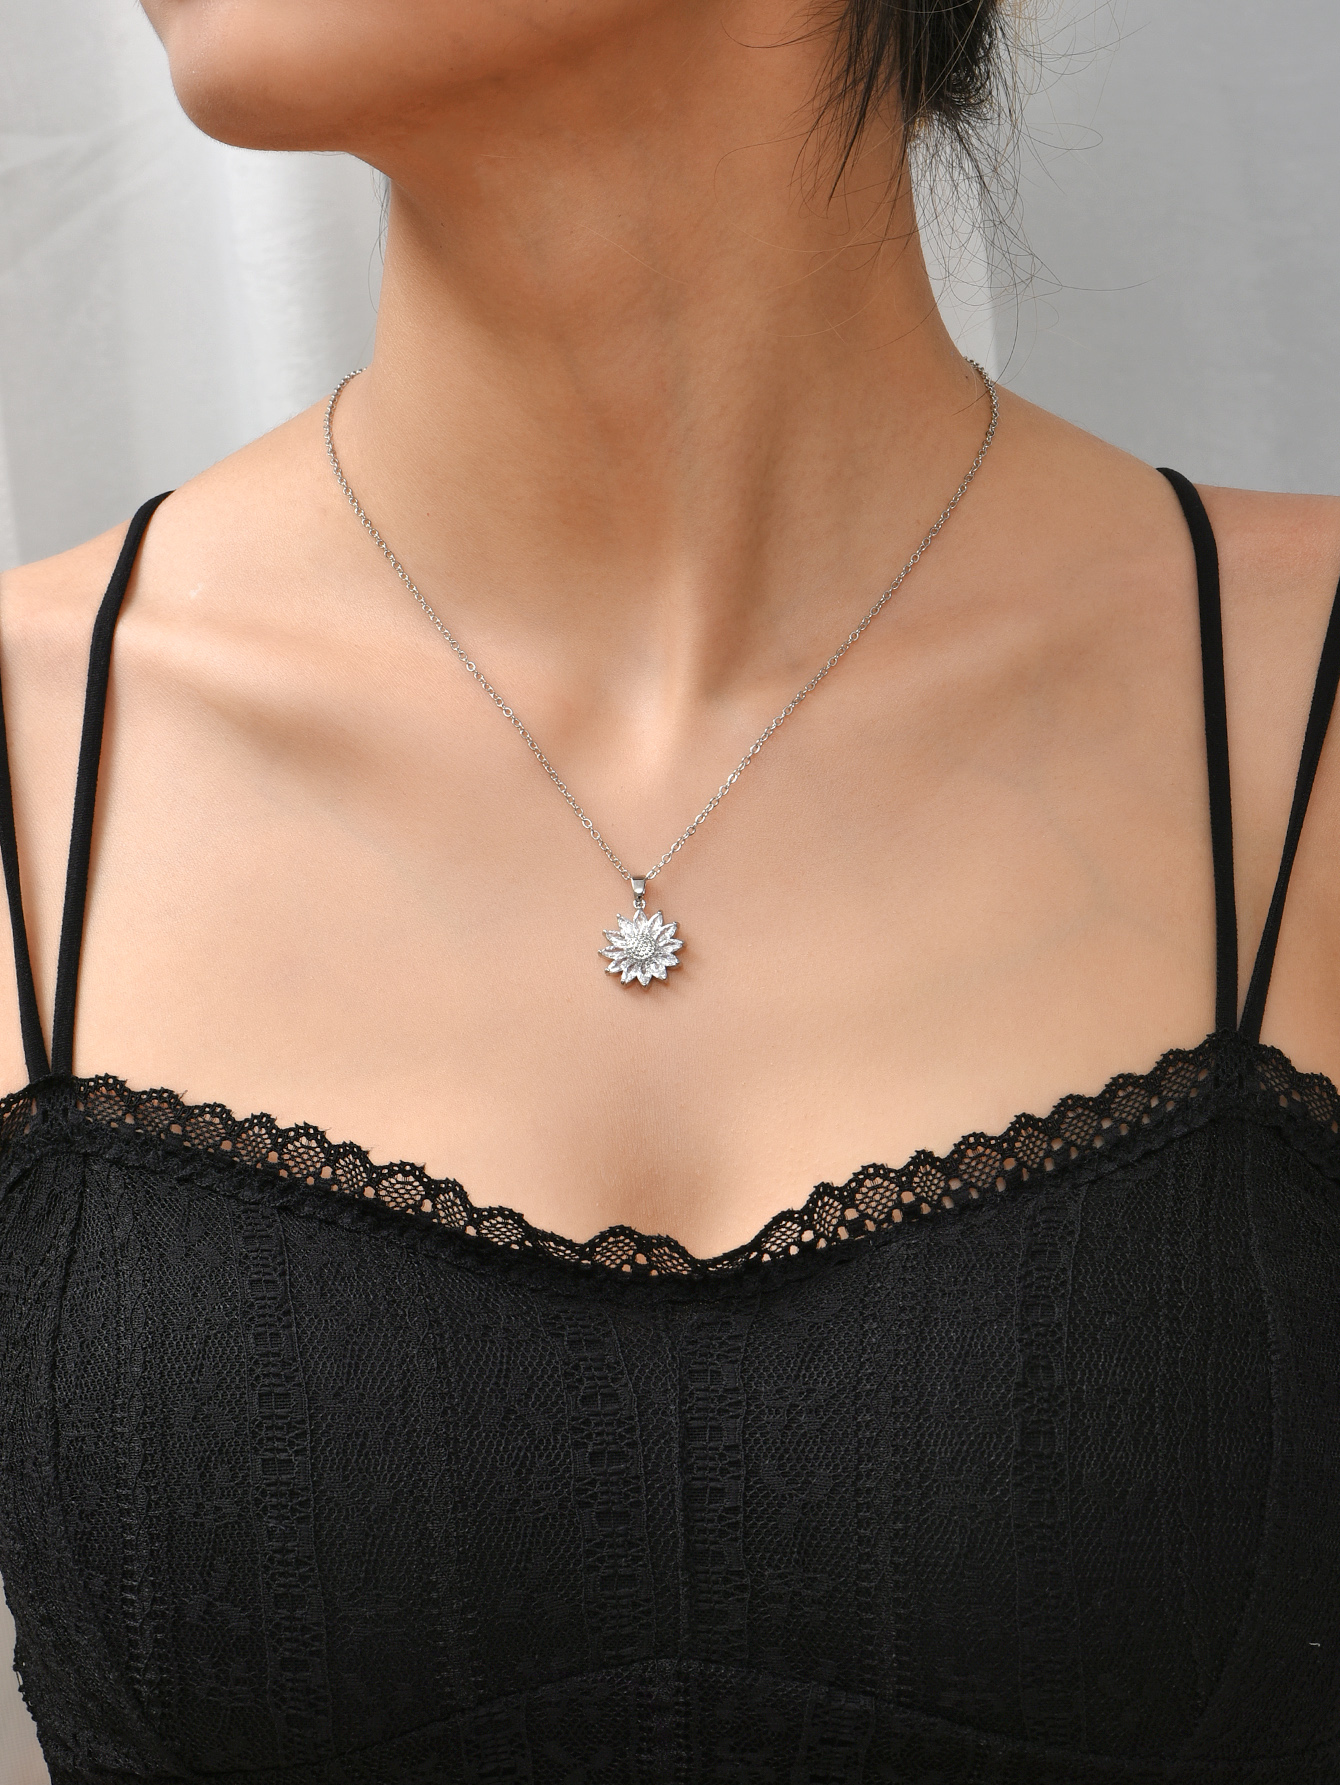 10 pcs - Sunflower Zircon Crystal Silver Plated Pendant Necklace|GCJ399|UK SELLER